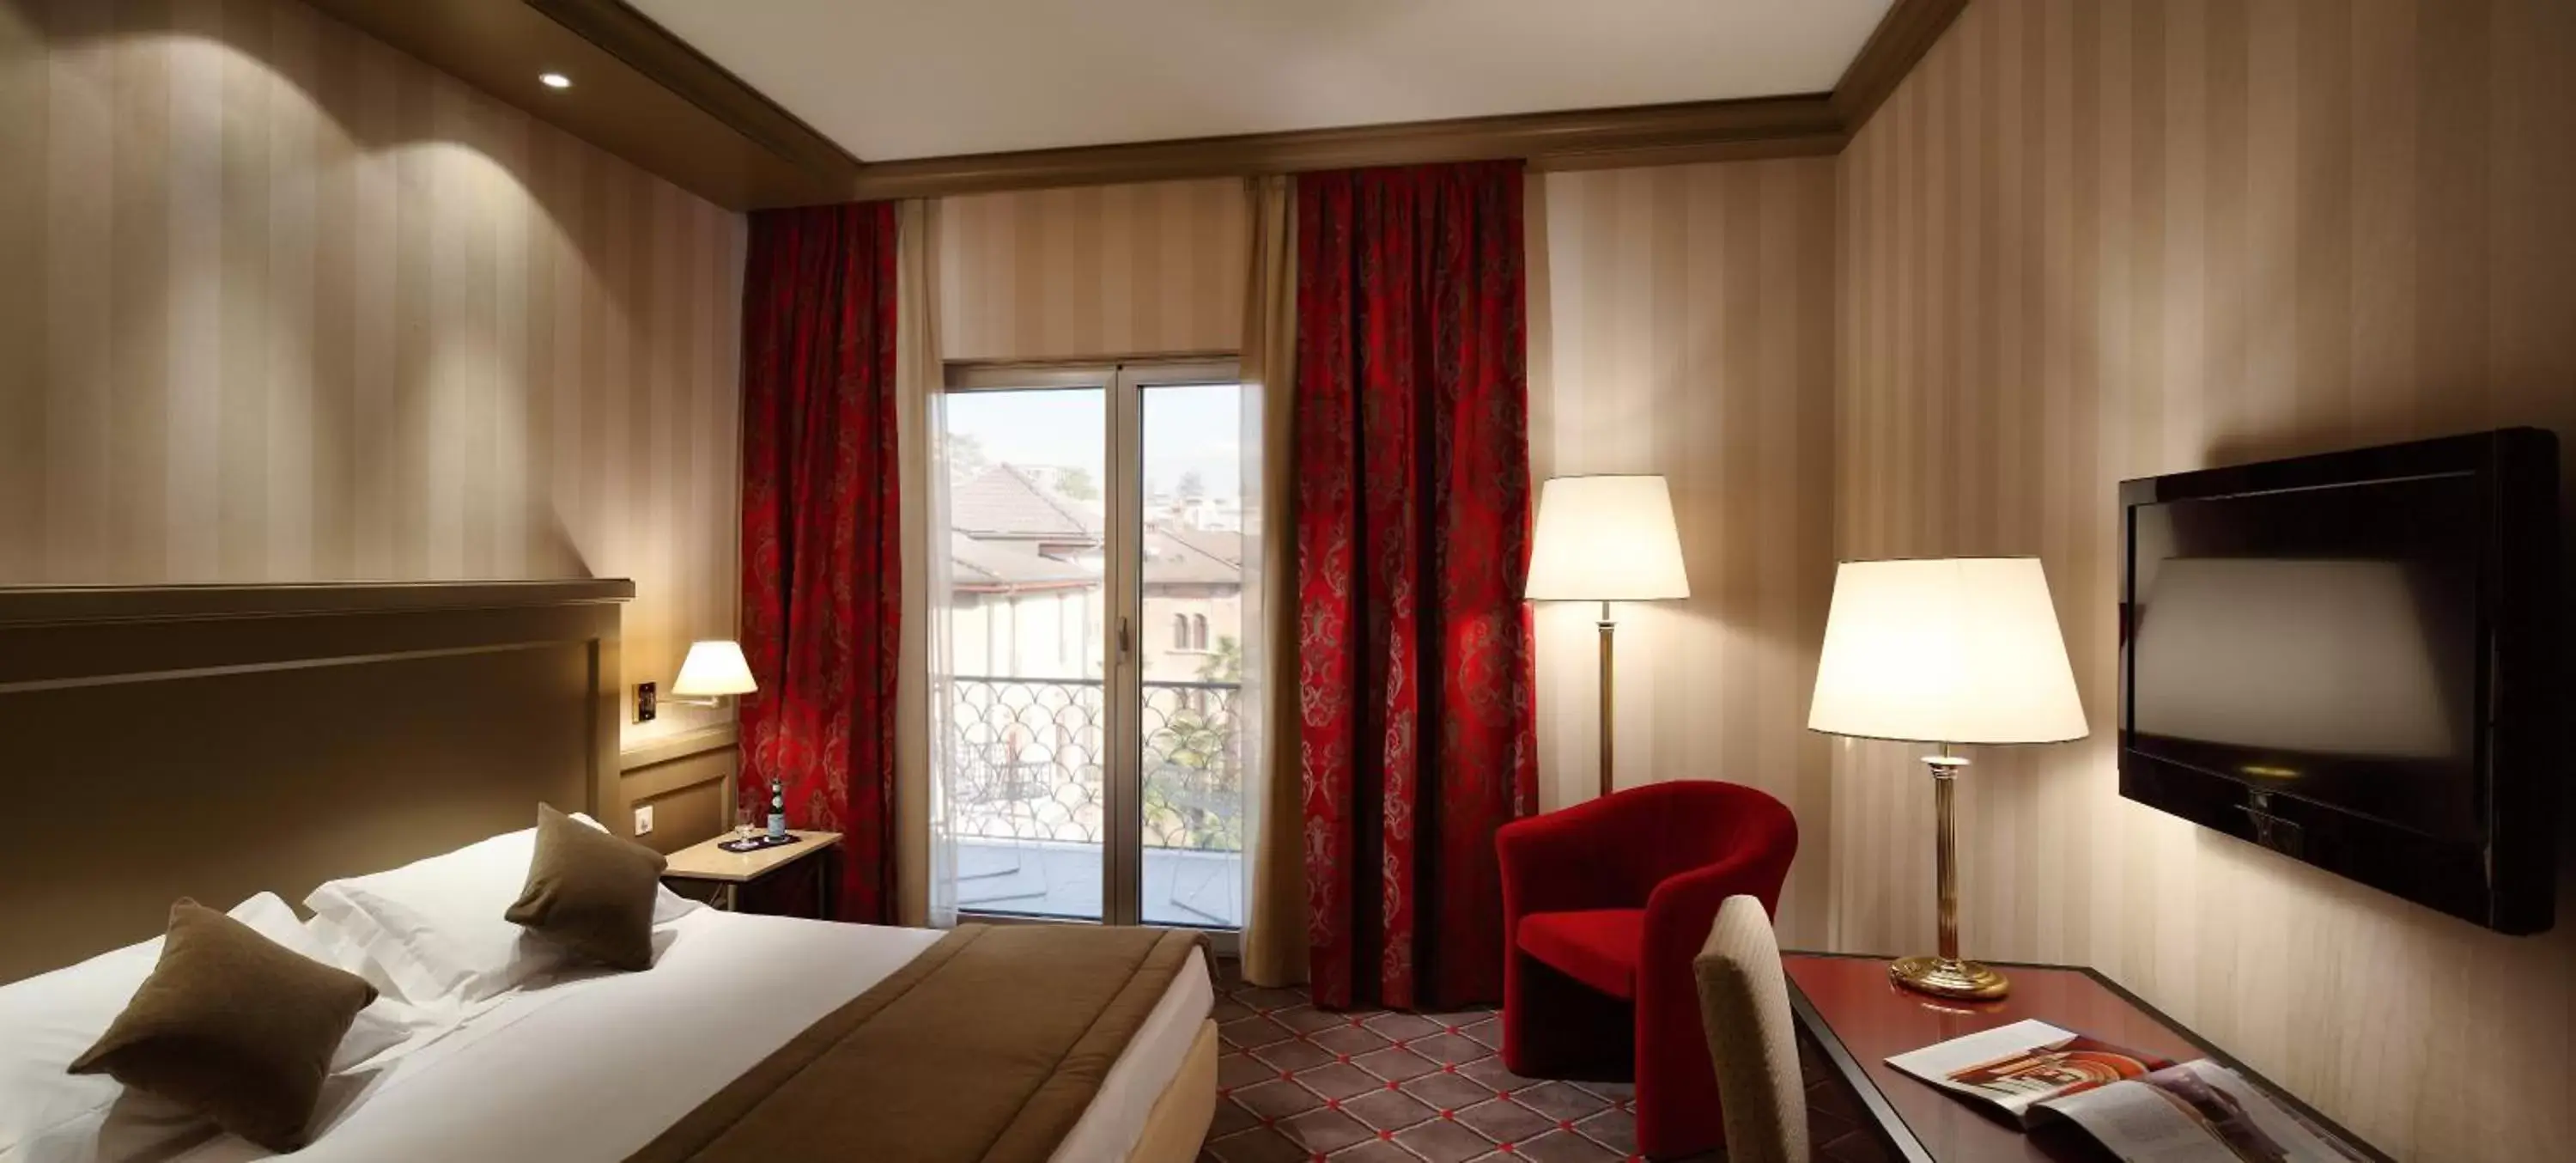 Double or Twin Room with Balcony in Hotel De La Paix